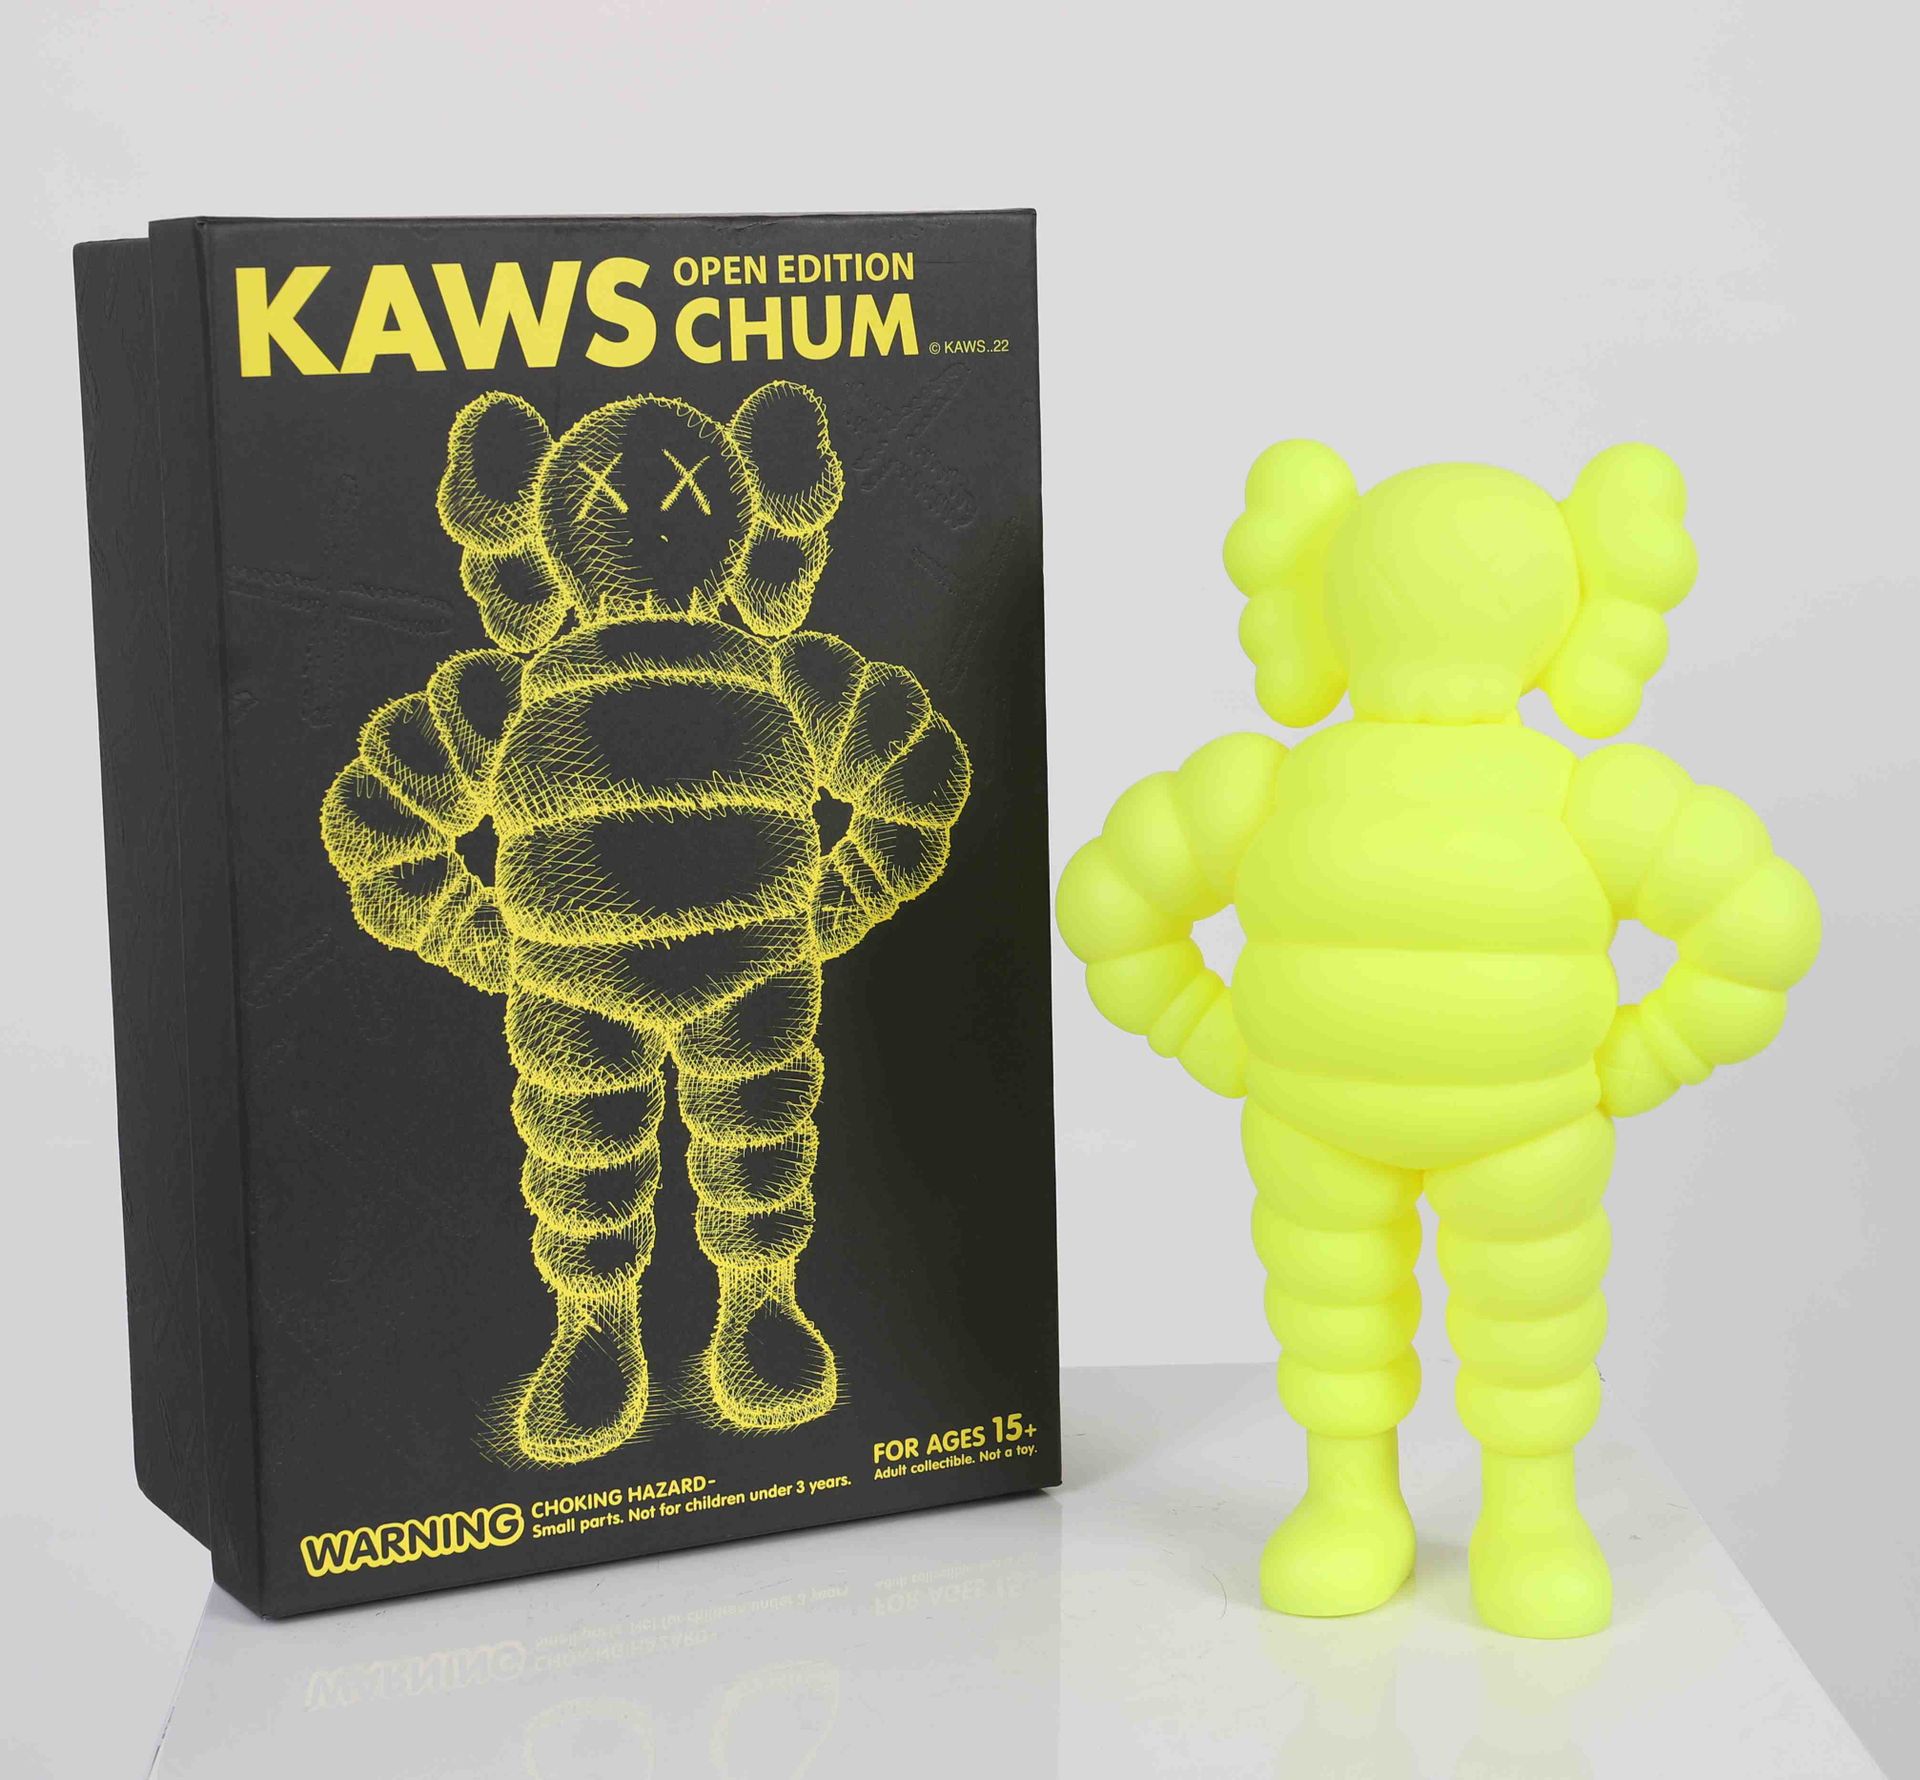 Null KAWS Chum Yellow 
开放版CHUM - Medicom玩具公司 
盒子里 
尺寸：高：29；宽：19厘米